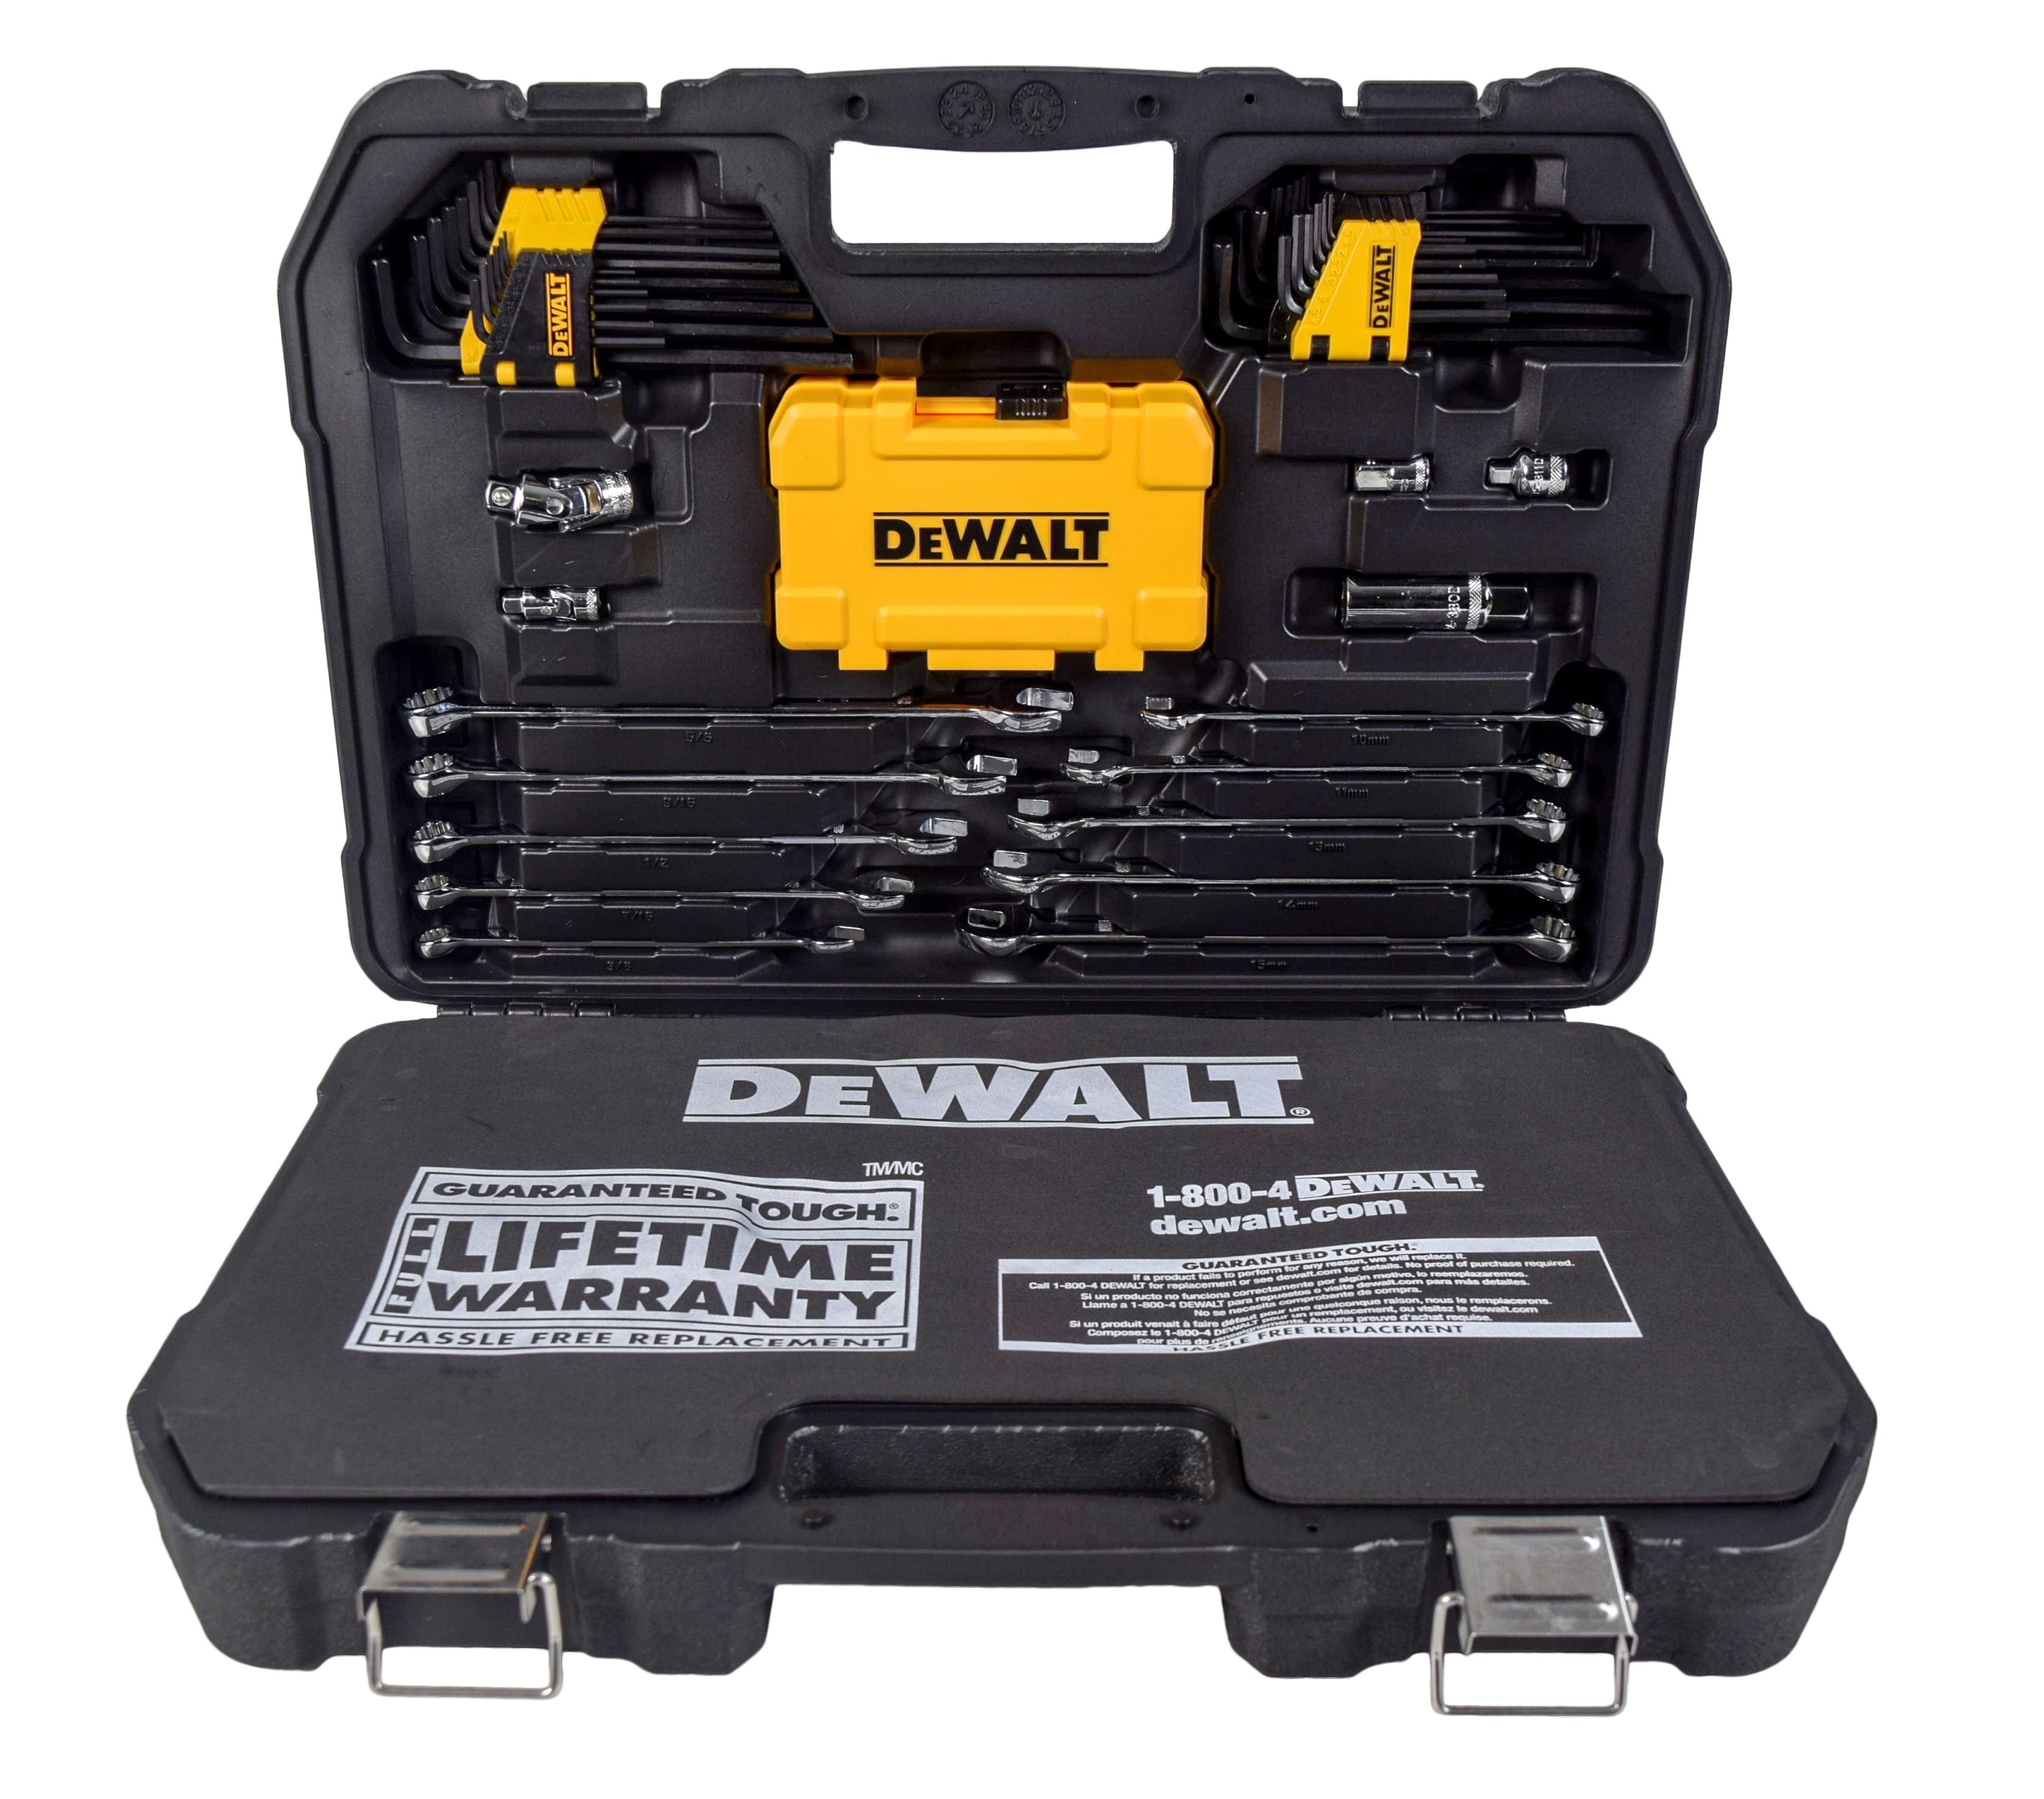 Dewalt DWMT73802 Mechanics Tool Kit Set with Case (142 Piece) - image 5 of 8